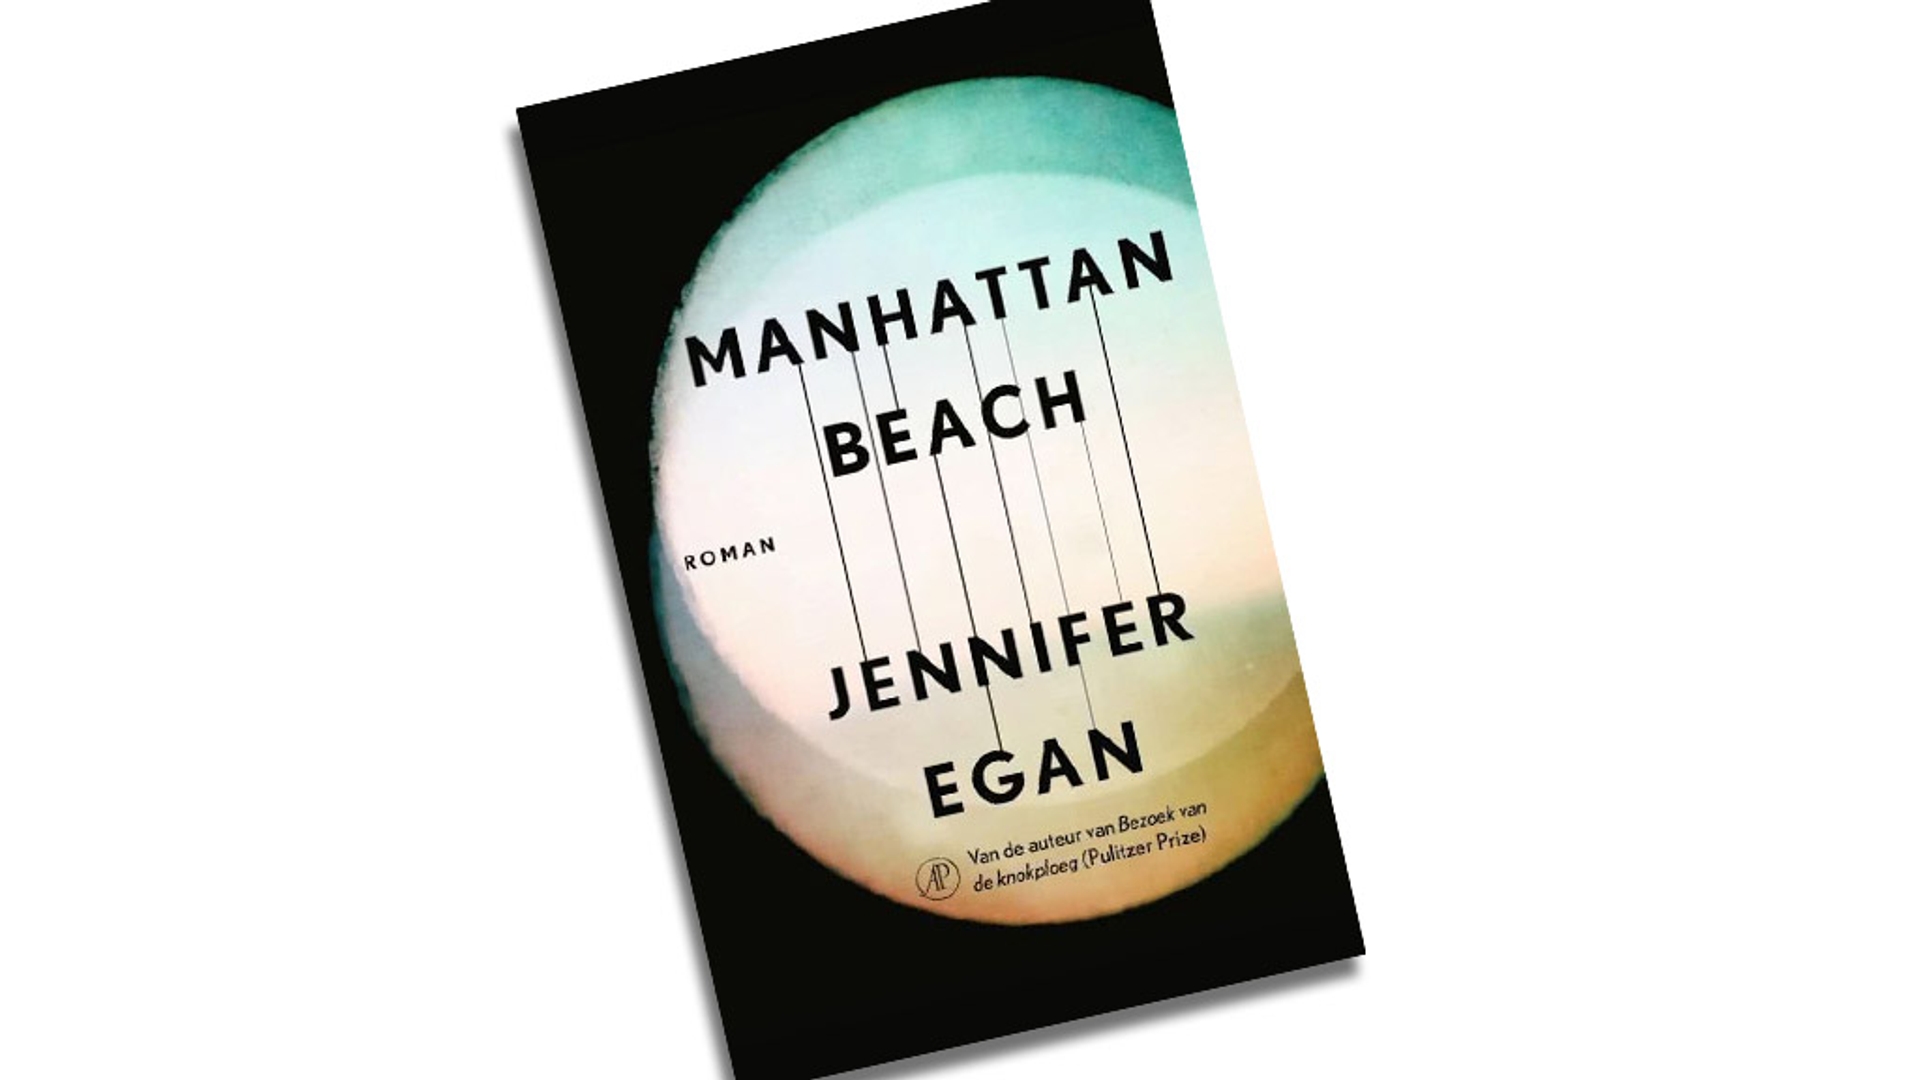 Manhattan Beach - Jennifer Egan